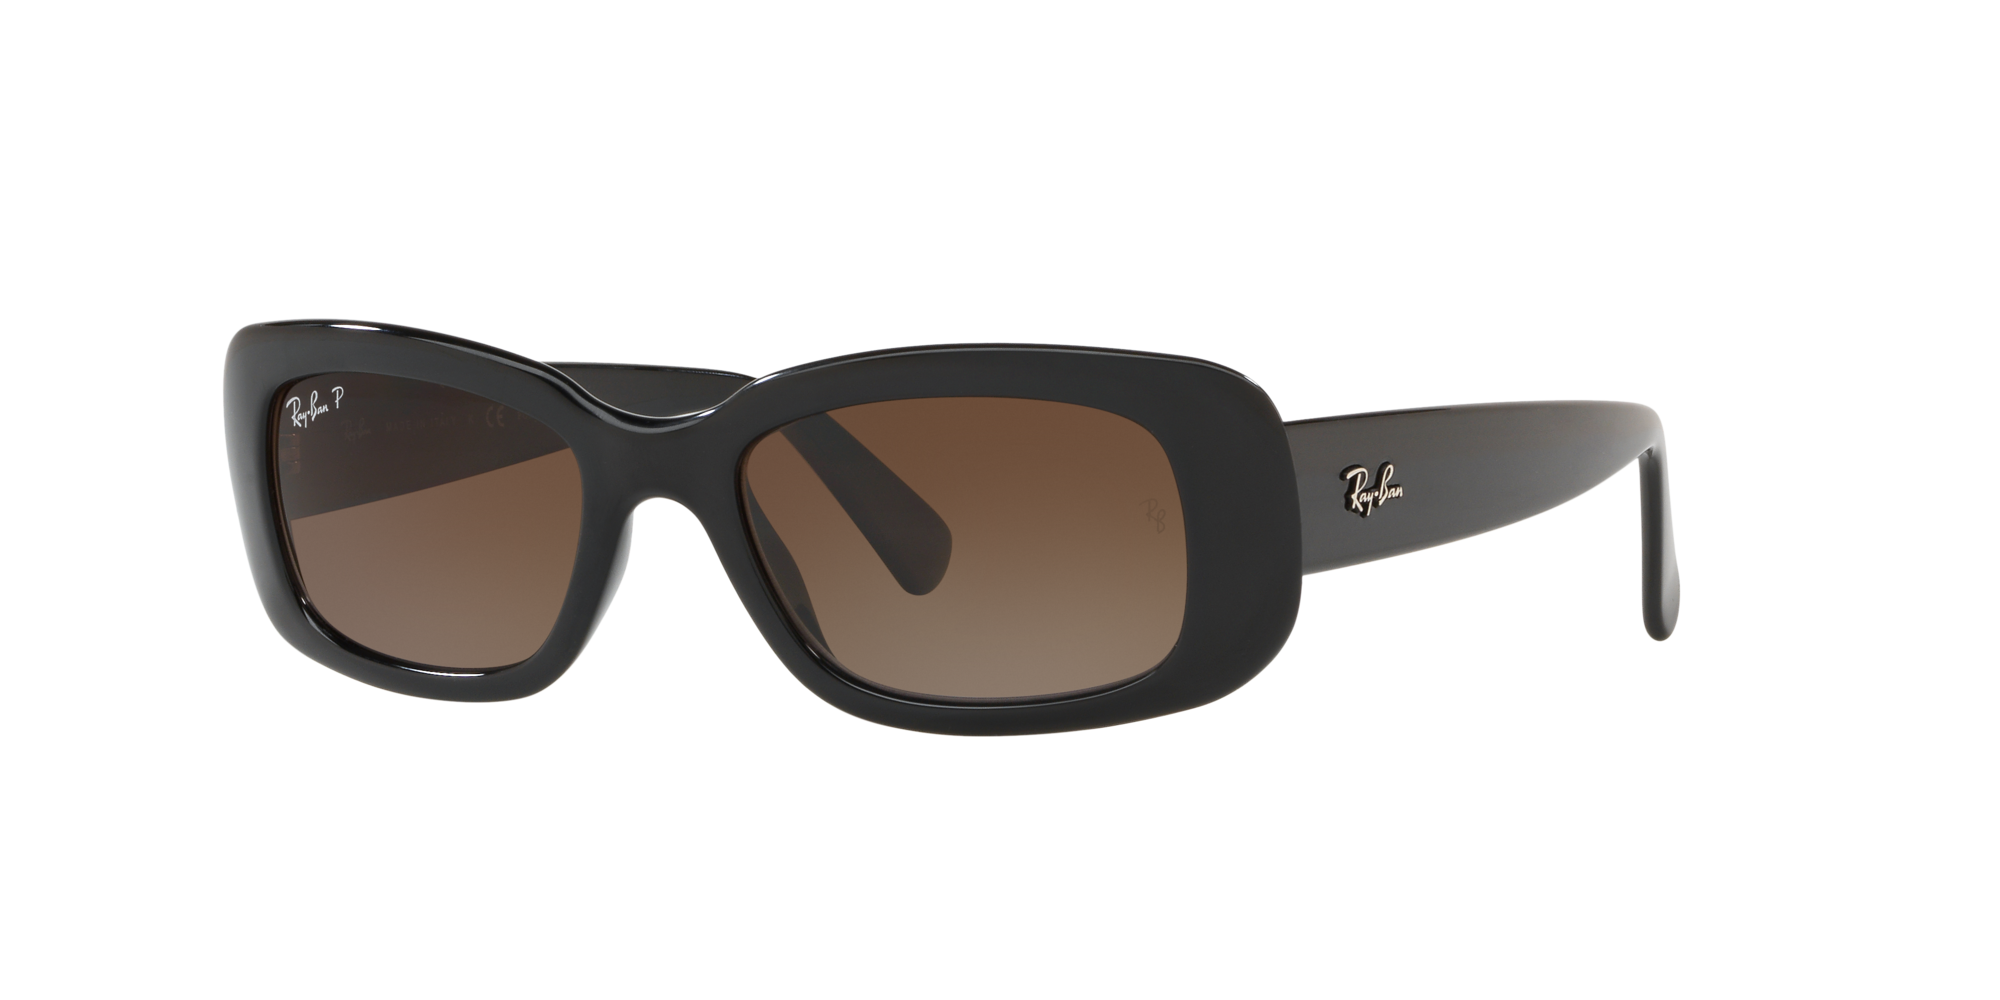 Chic Black Sunglasses - Frameless Sunglasses - Black Sunnies - Lulus